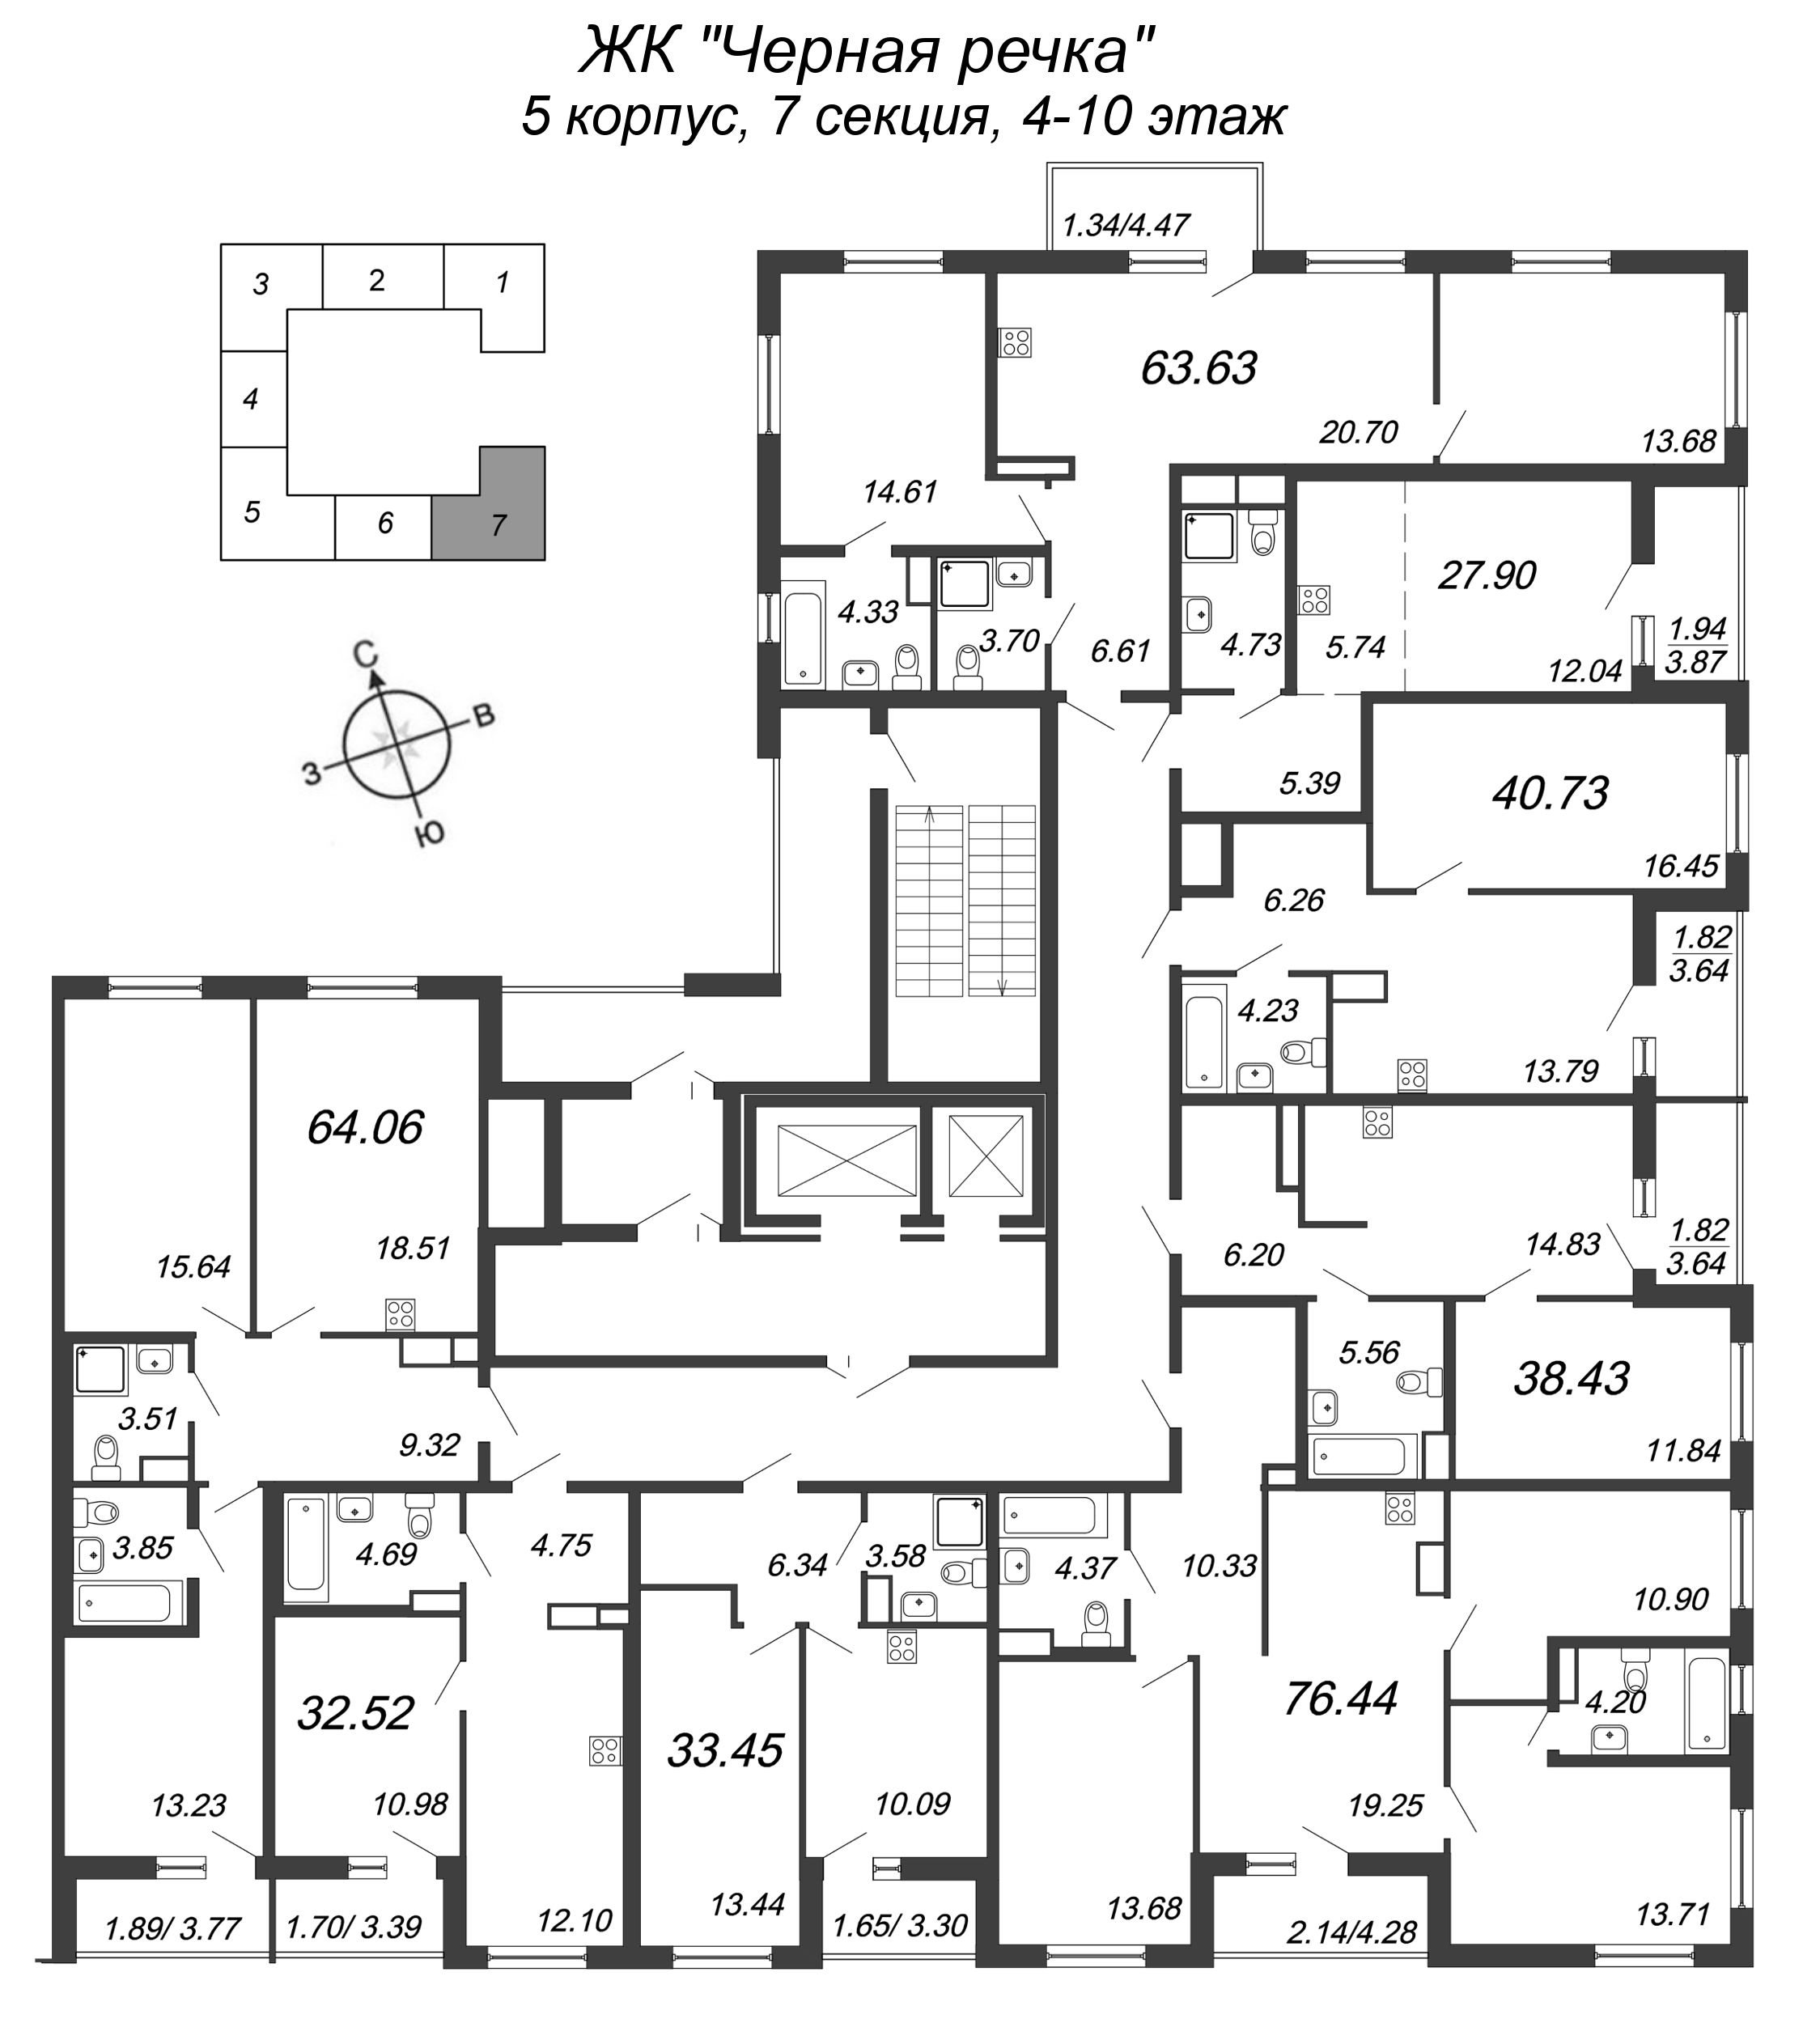 2-комнатная (Евро) квартира, 38.43 м² - планировка этажа